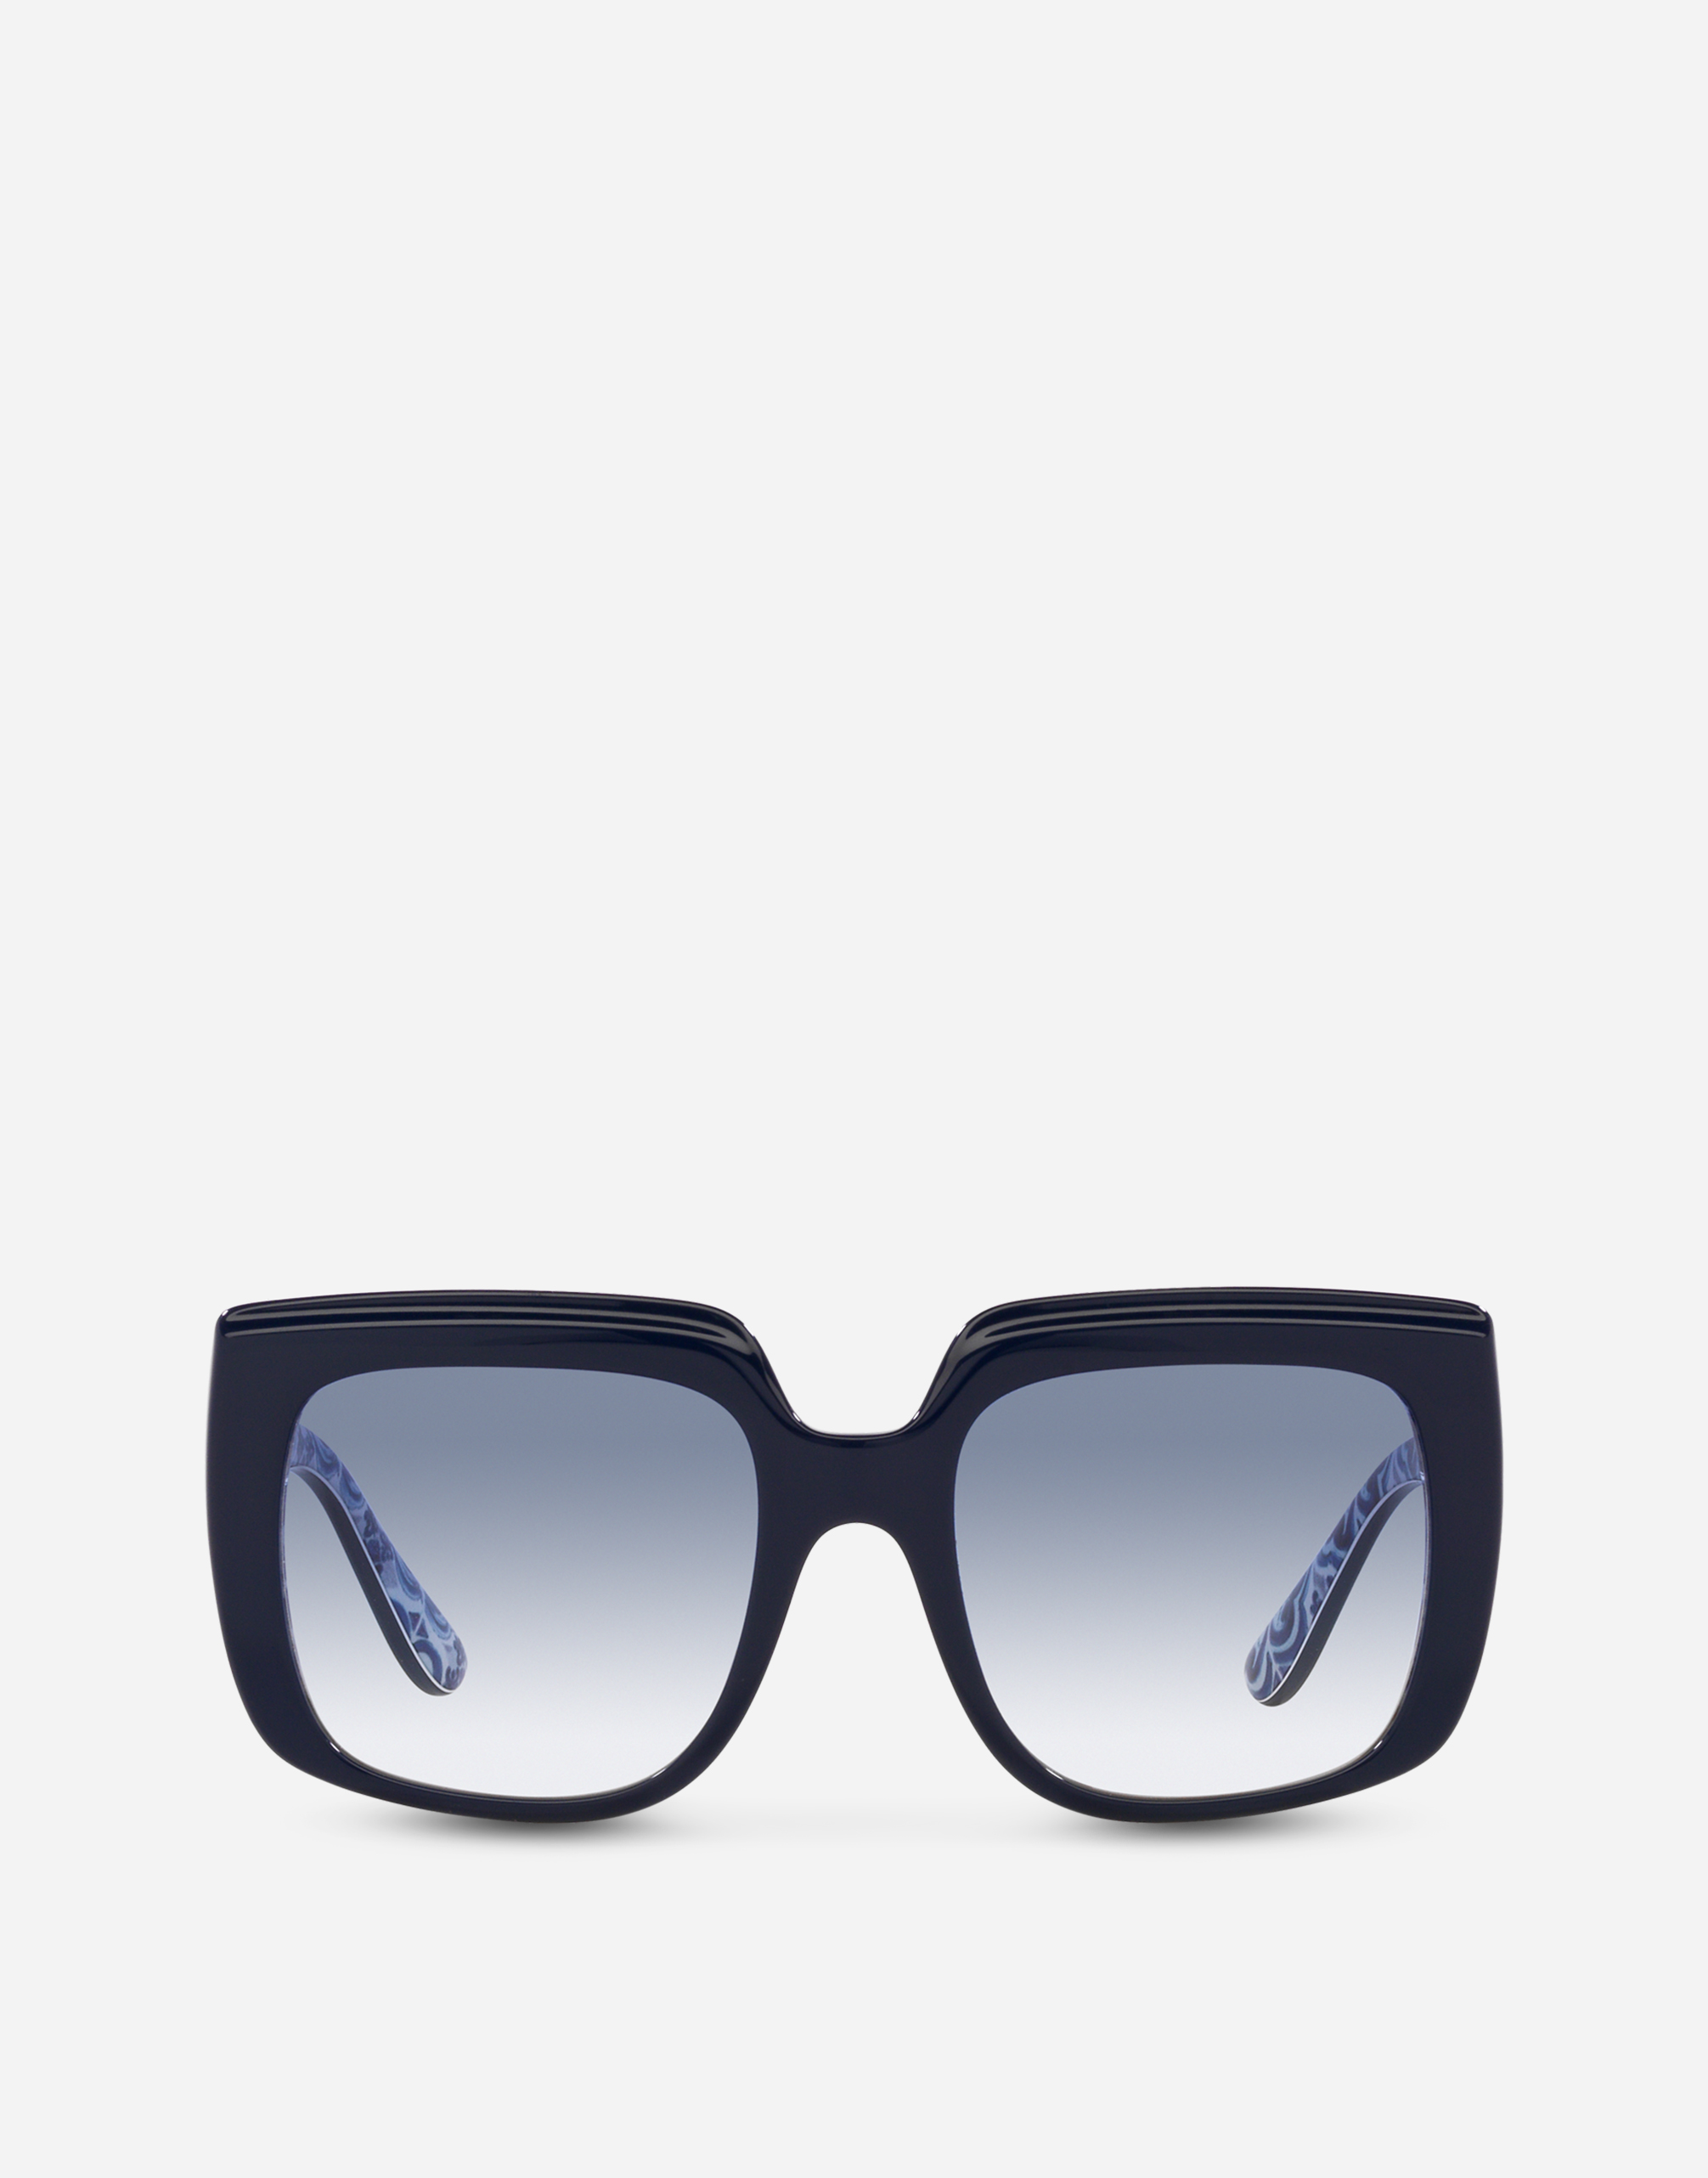 Dolce & Gabbana New Print Sunglasses In Blue Nevy On Maiolica